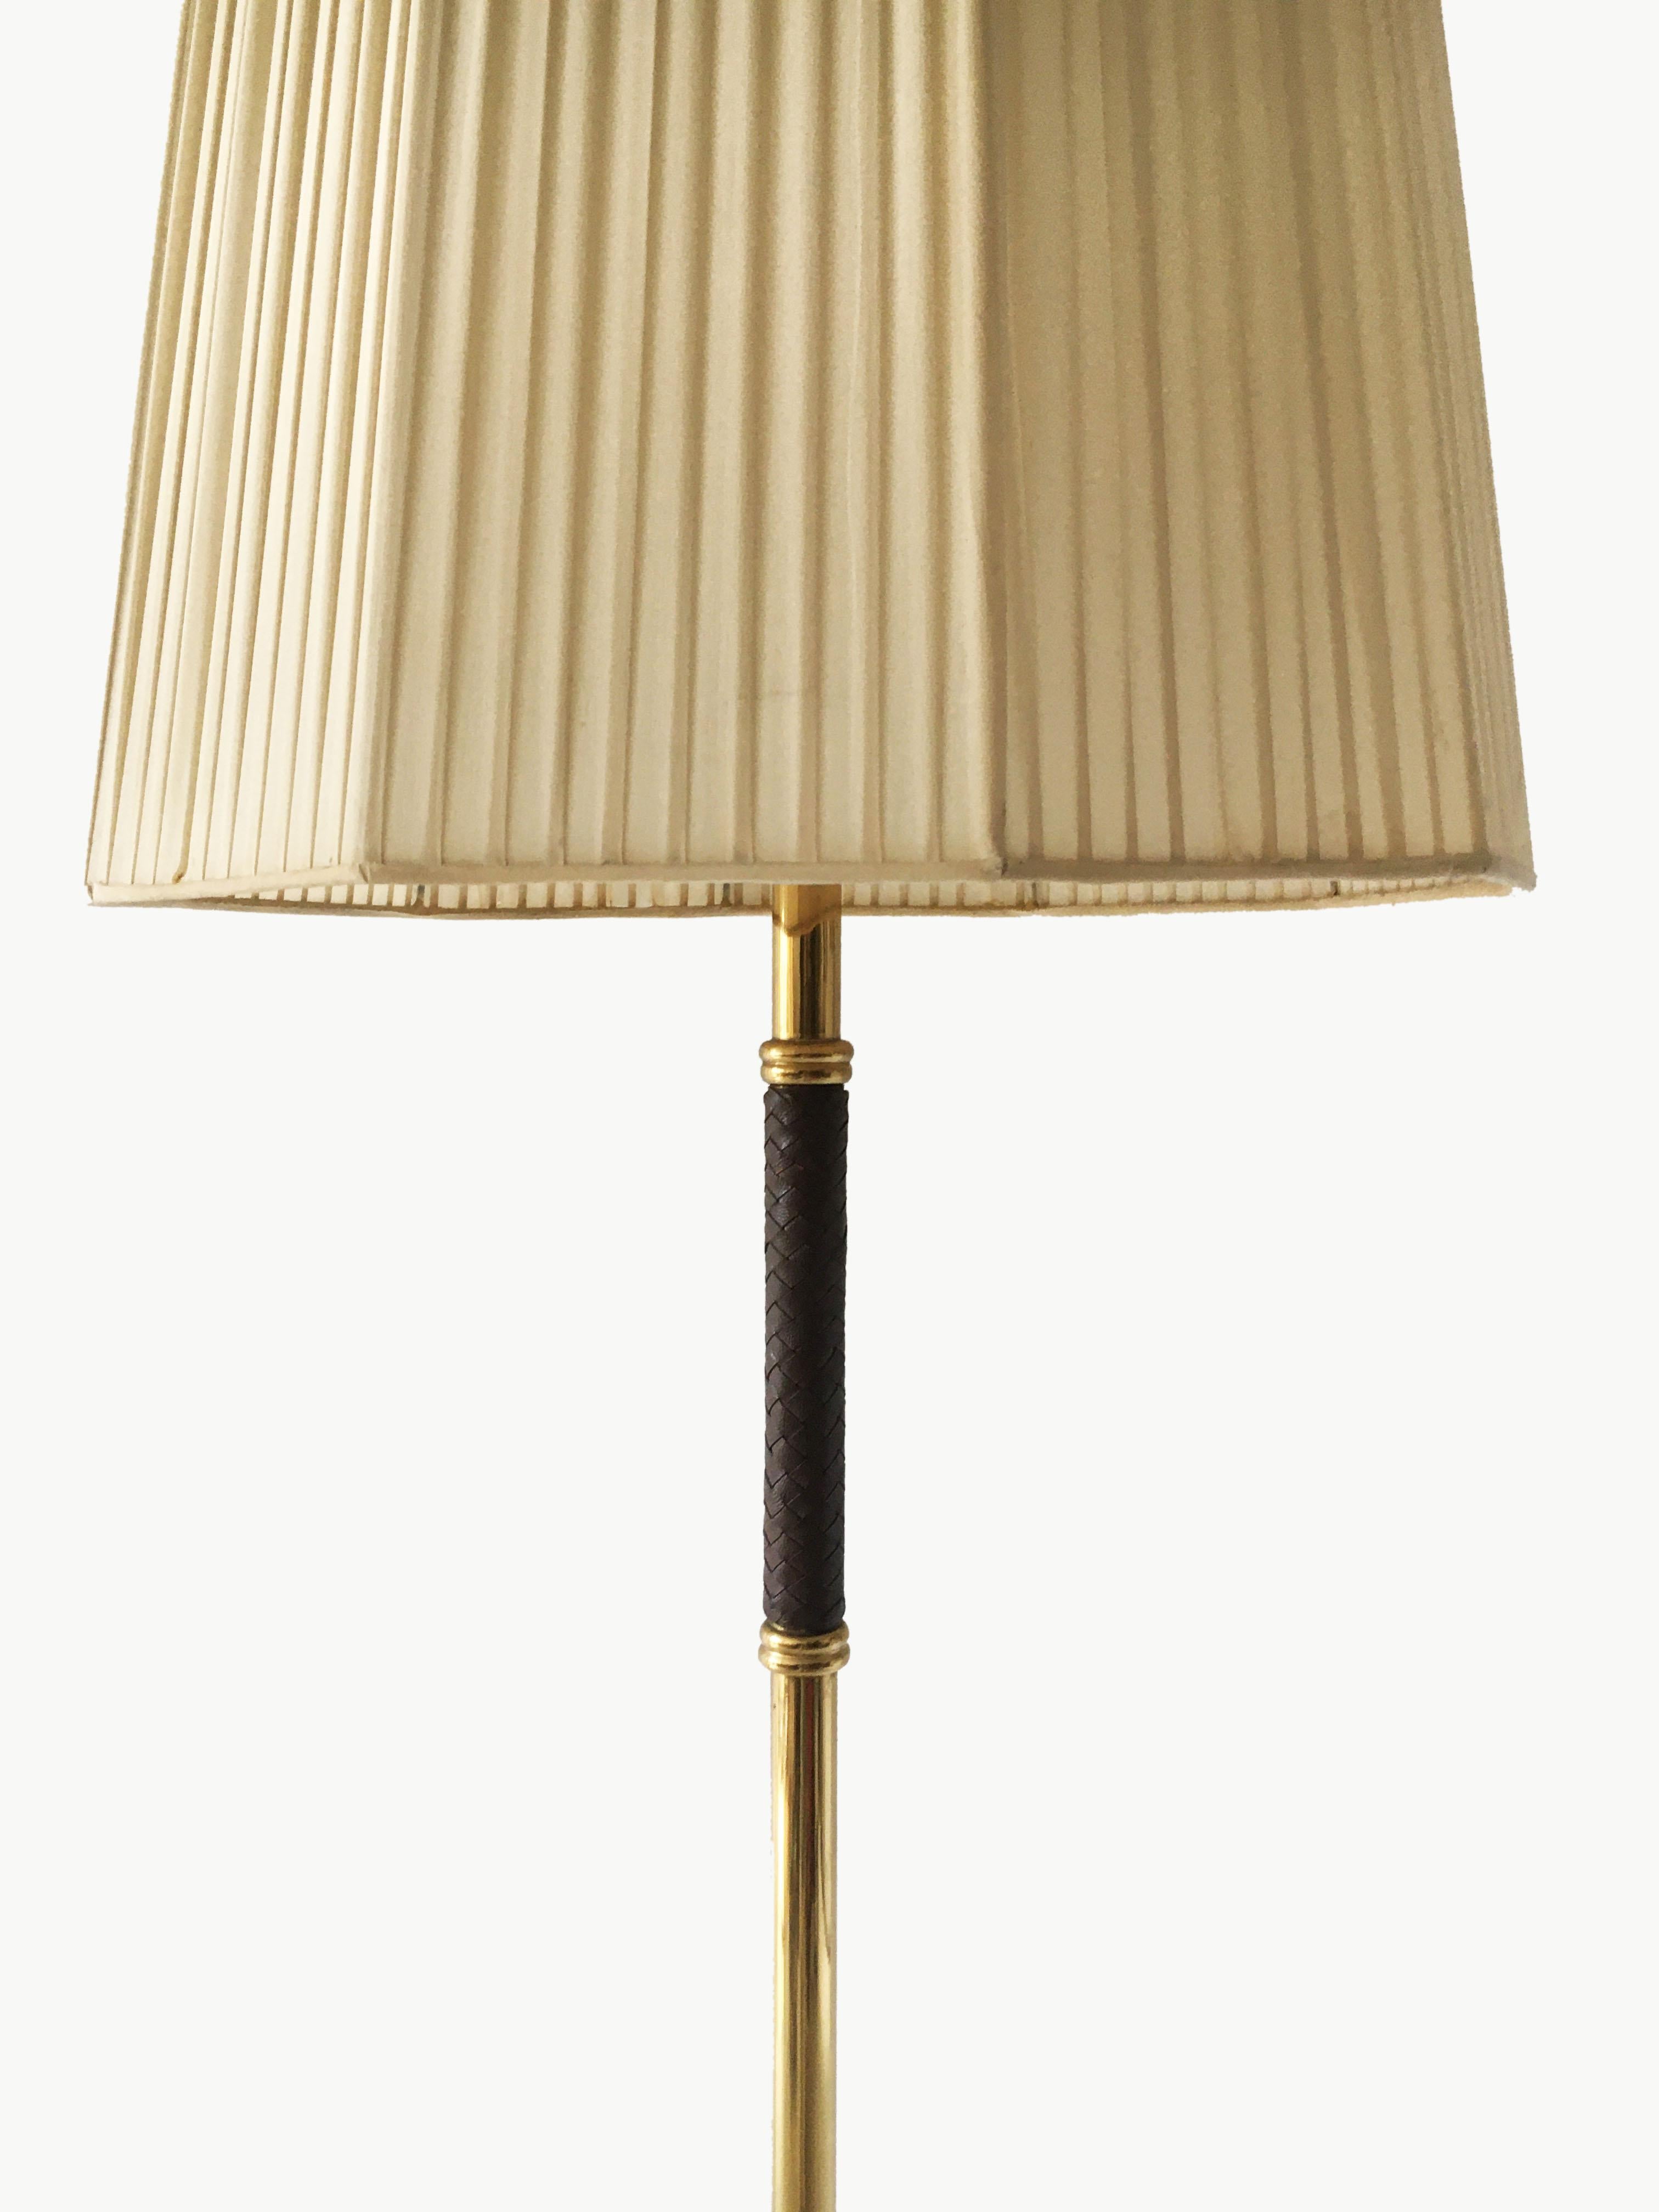 Austrian Josef Frank Floor Lamp J.T. Kalmar, Austria, 1950s For Sale